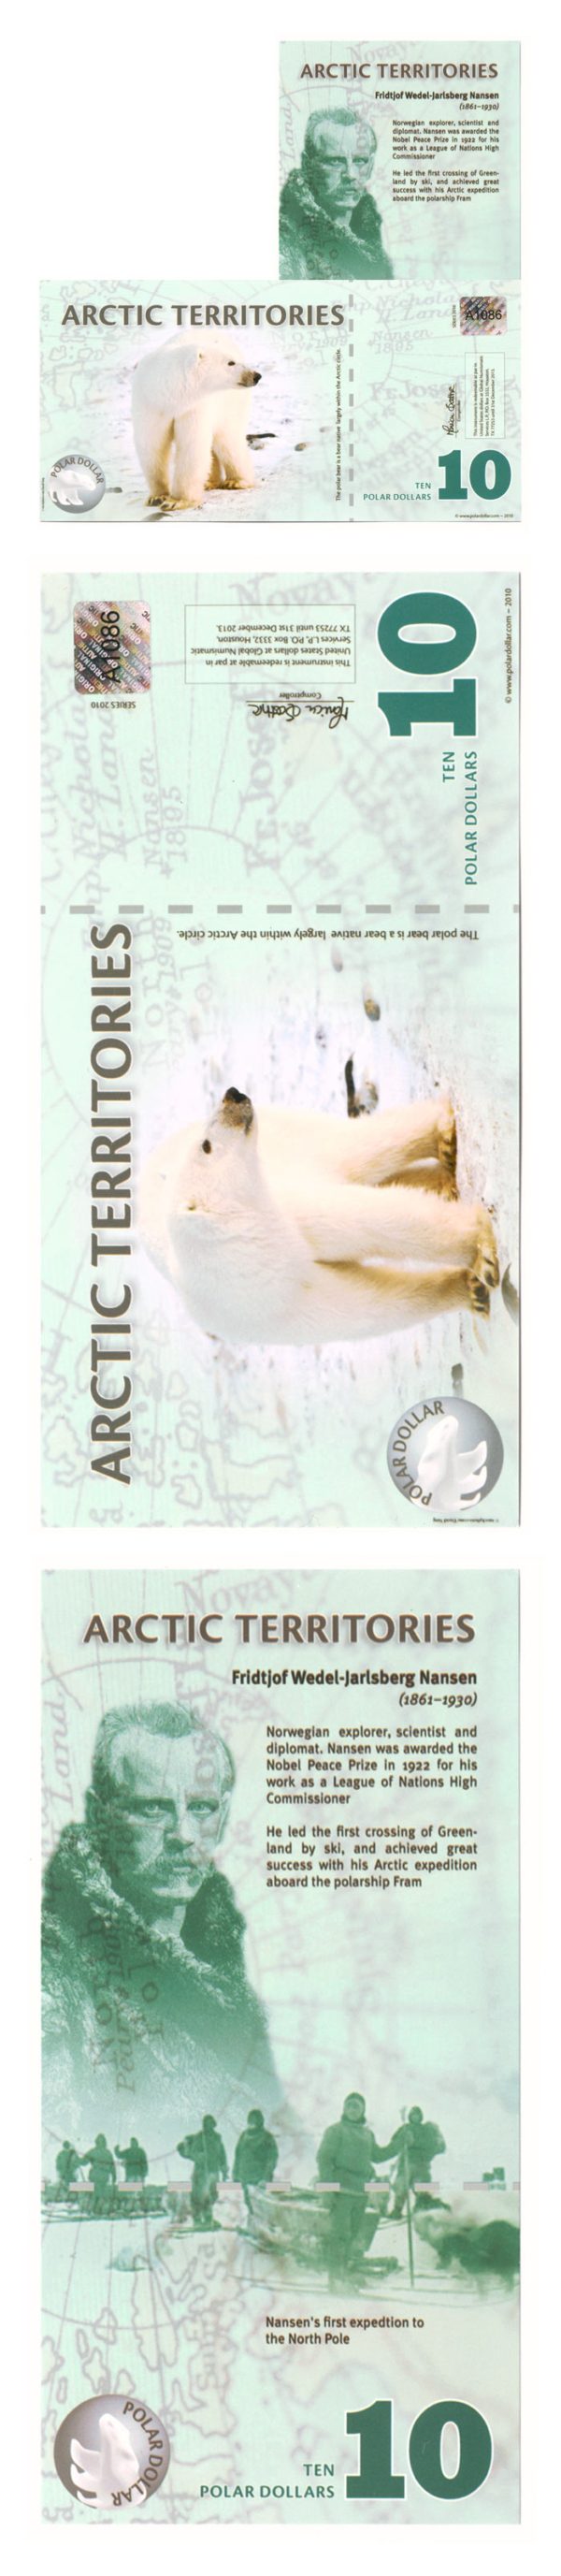 Arctic Territories - Polar Bear Dollars - $10 - 2010  - Polymer Banknote - Crisp Uncirculated